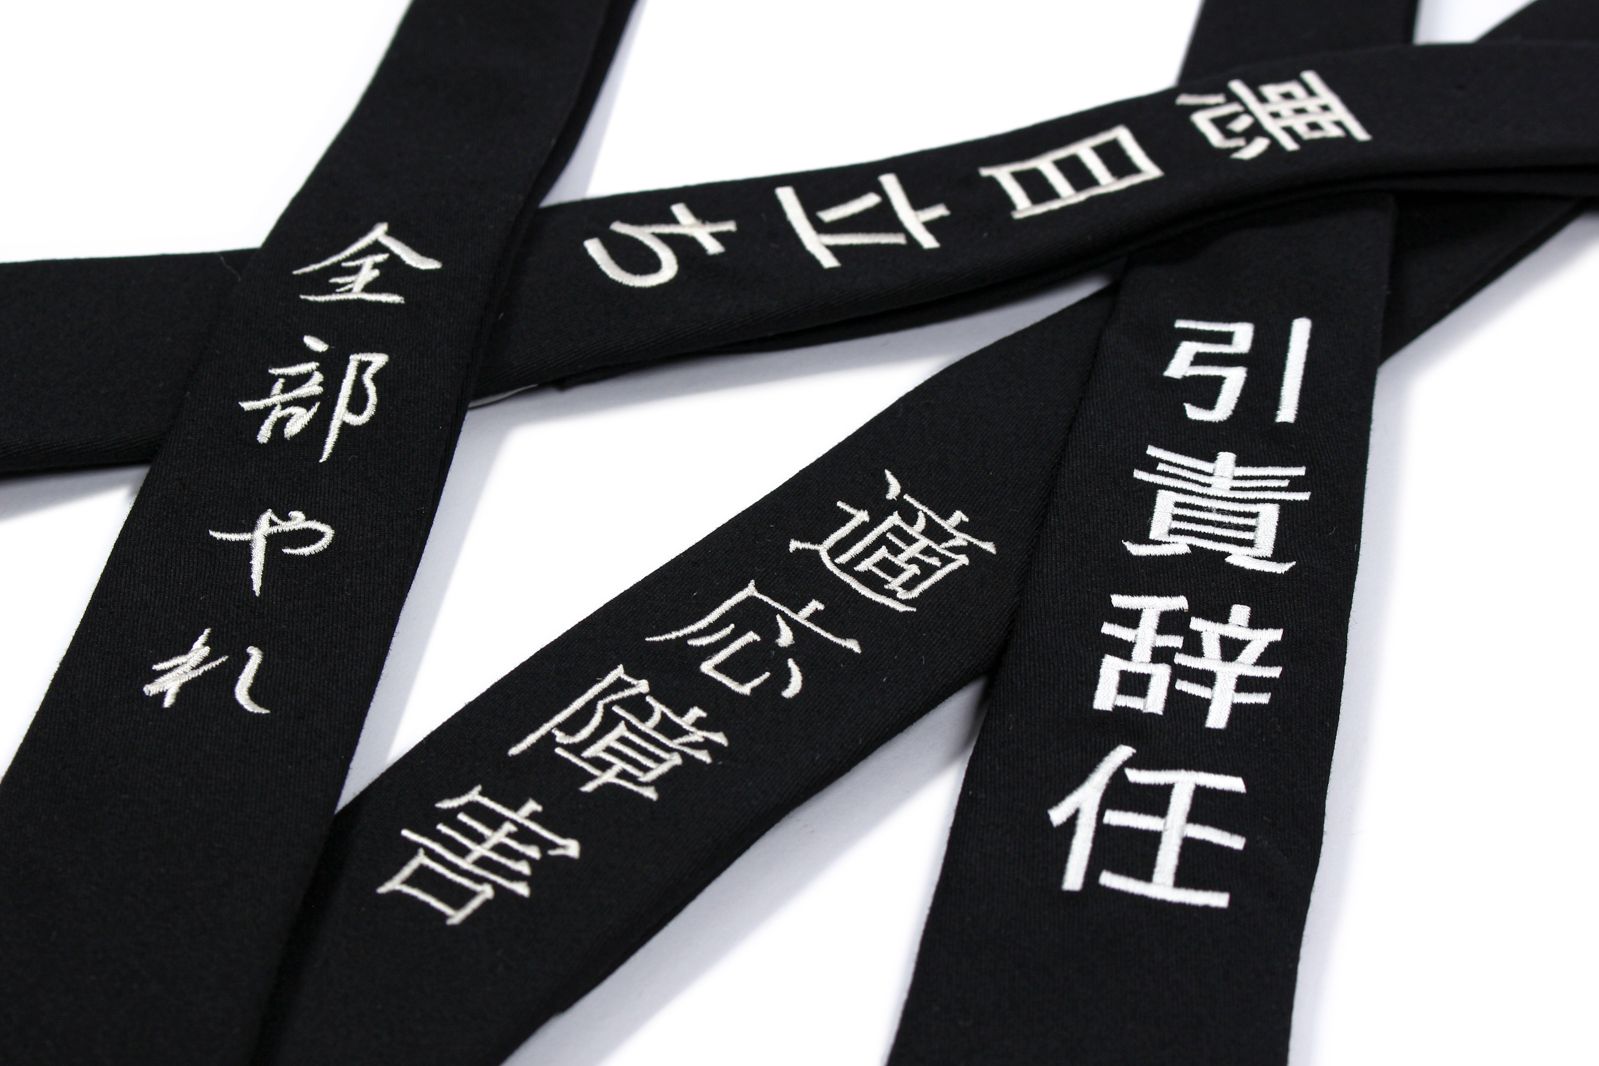 Yohji Yamamoto [話題ネタ必須のメッセージ刺繍のネクタイ] | ALUBUS 